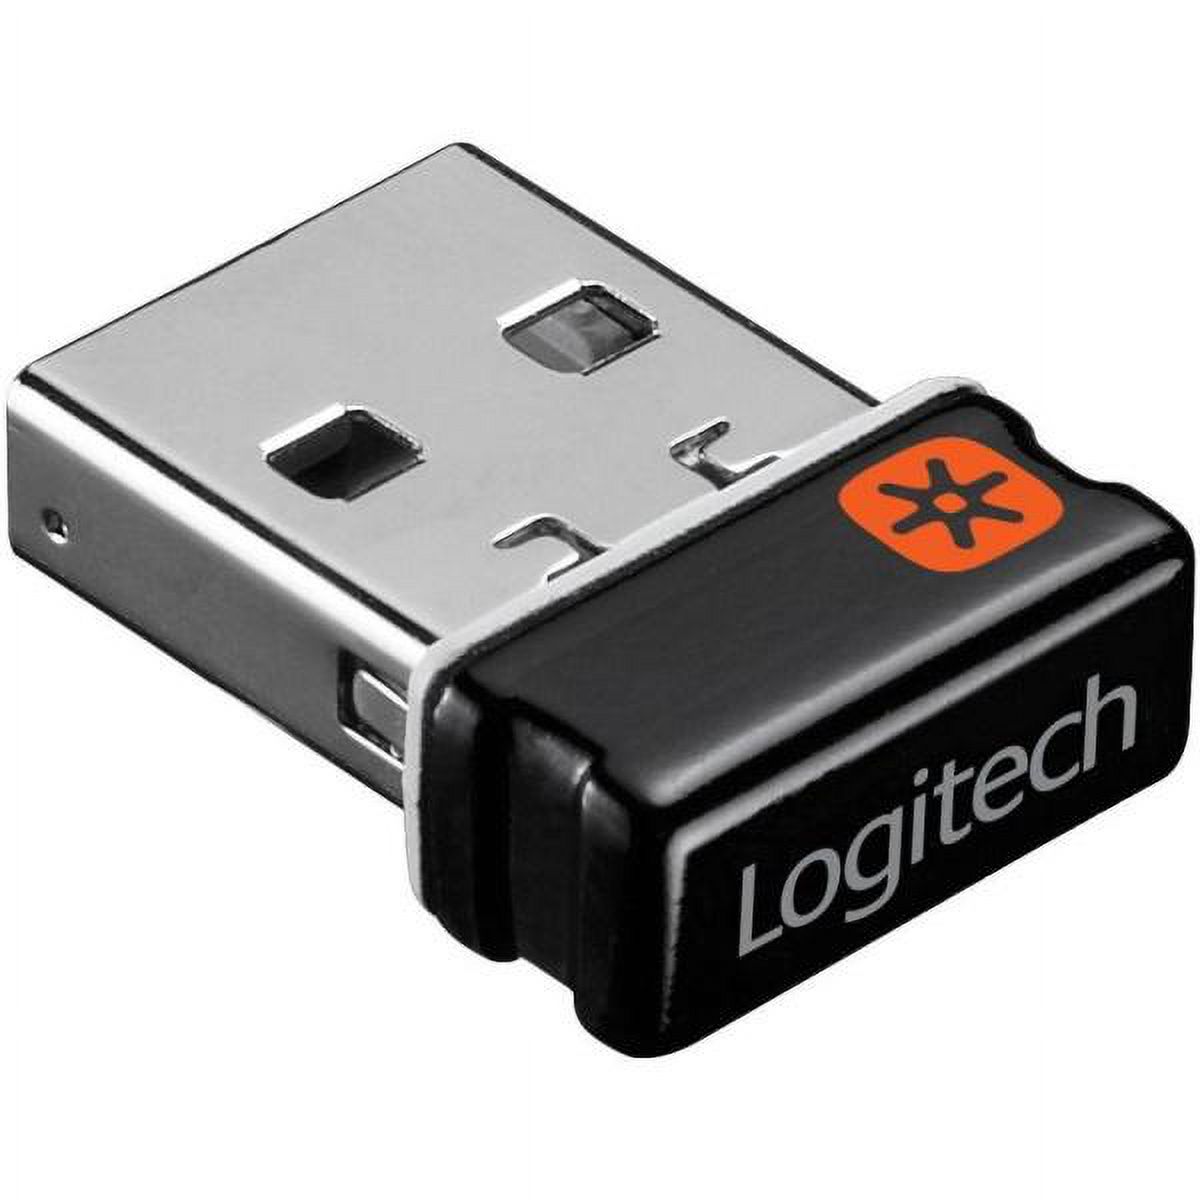 Logitech Unifying USB Receiver [Electronics] - image 1 of 4